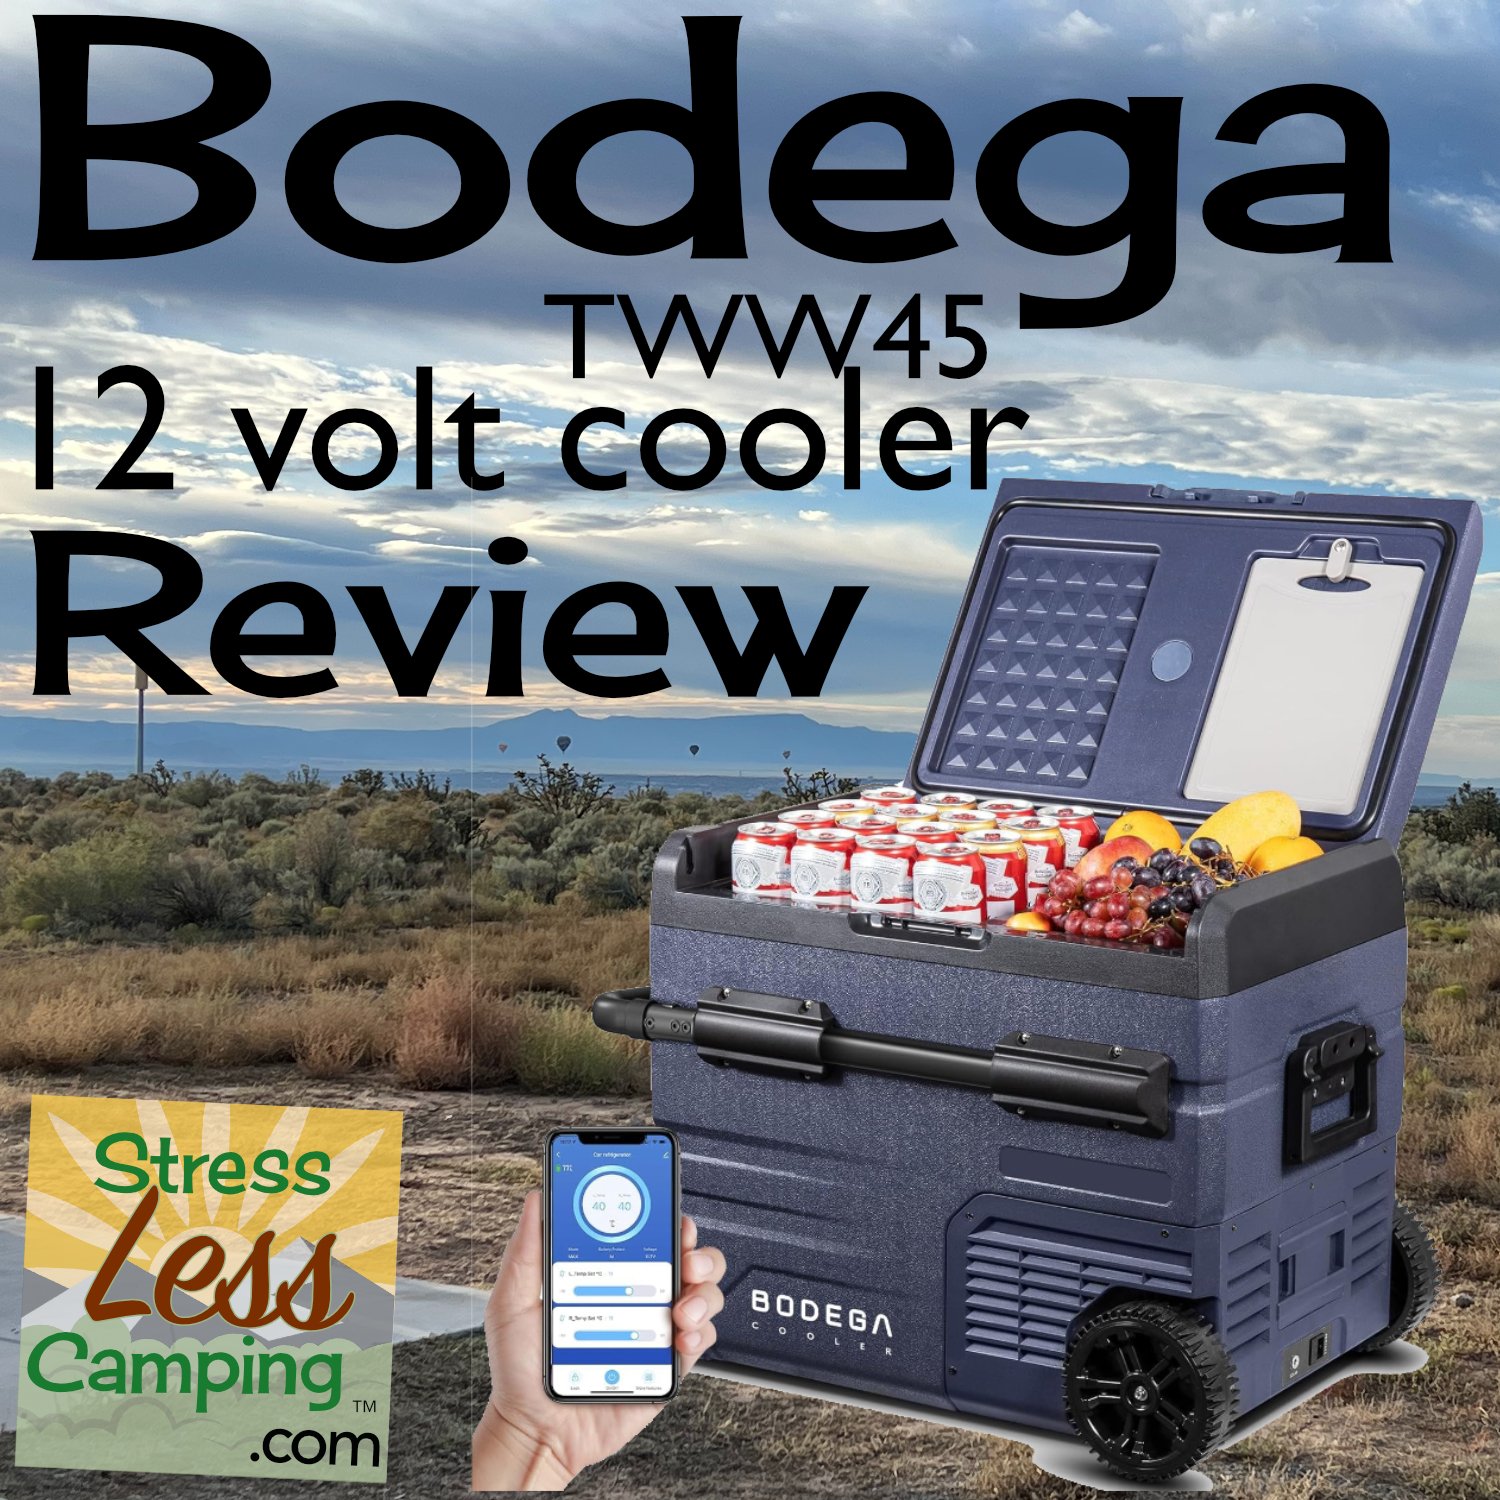 Bodega TWW45 12 volt cooler review